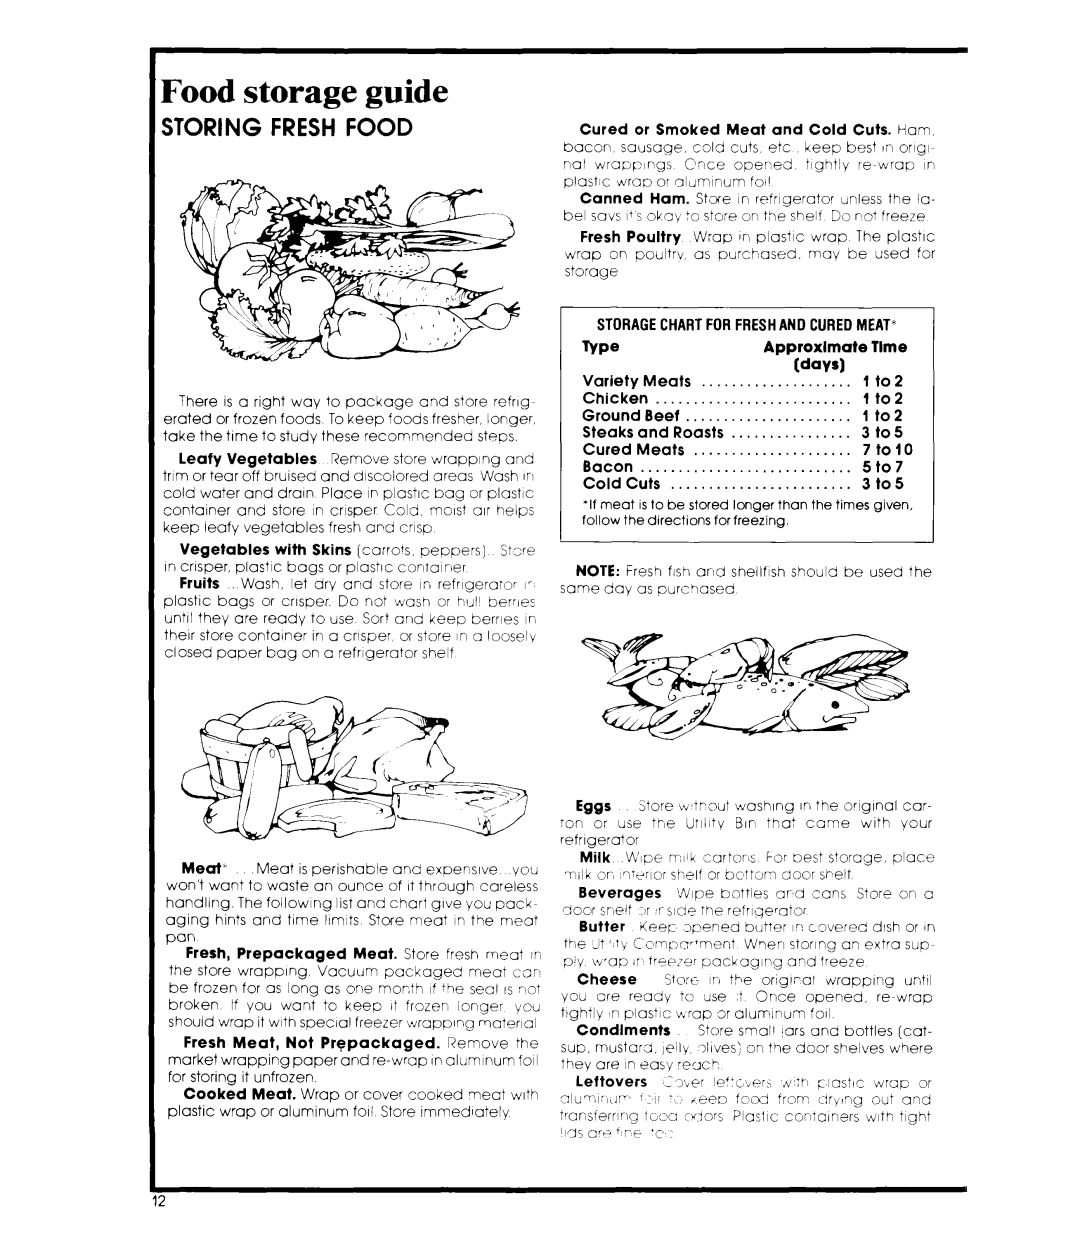 Whirlpool ED25PM manual Food storage guide, Storing Fresh Food, W-w1, Eggs 